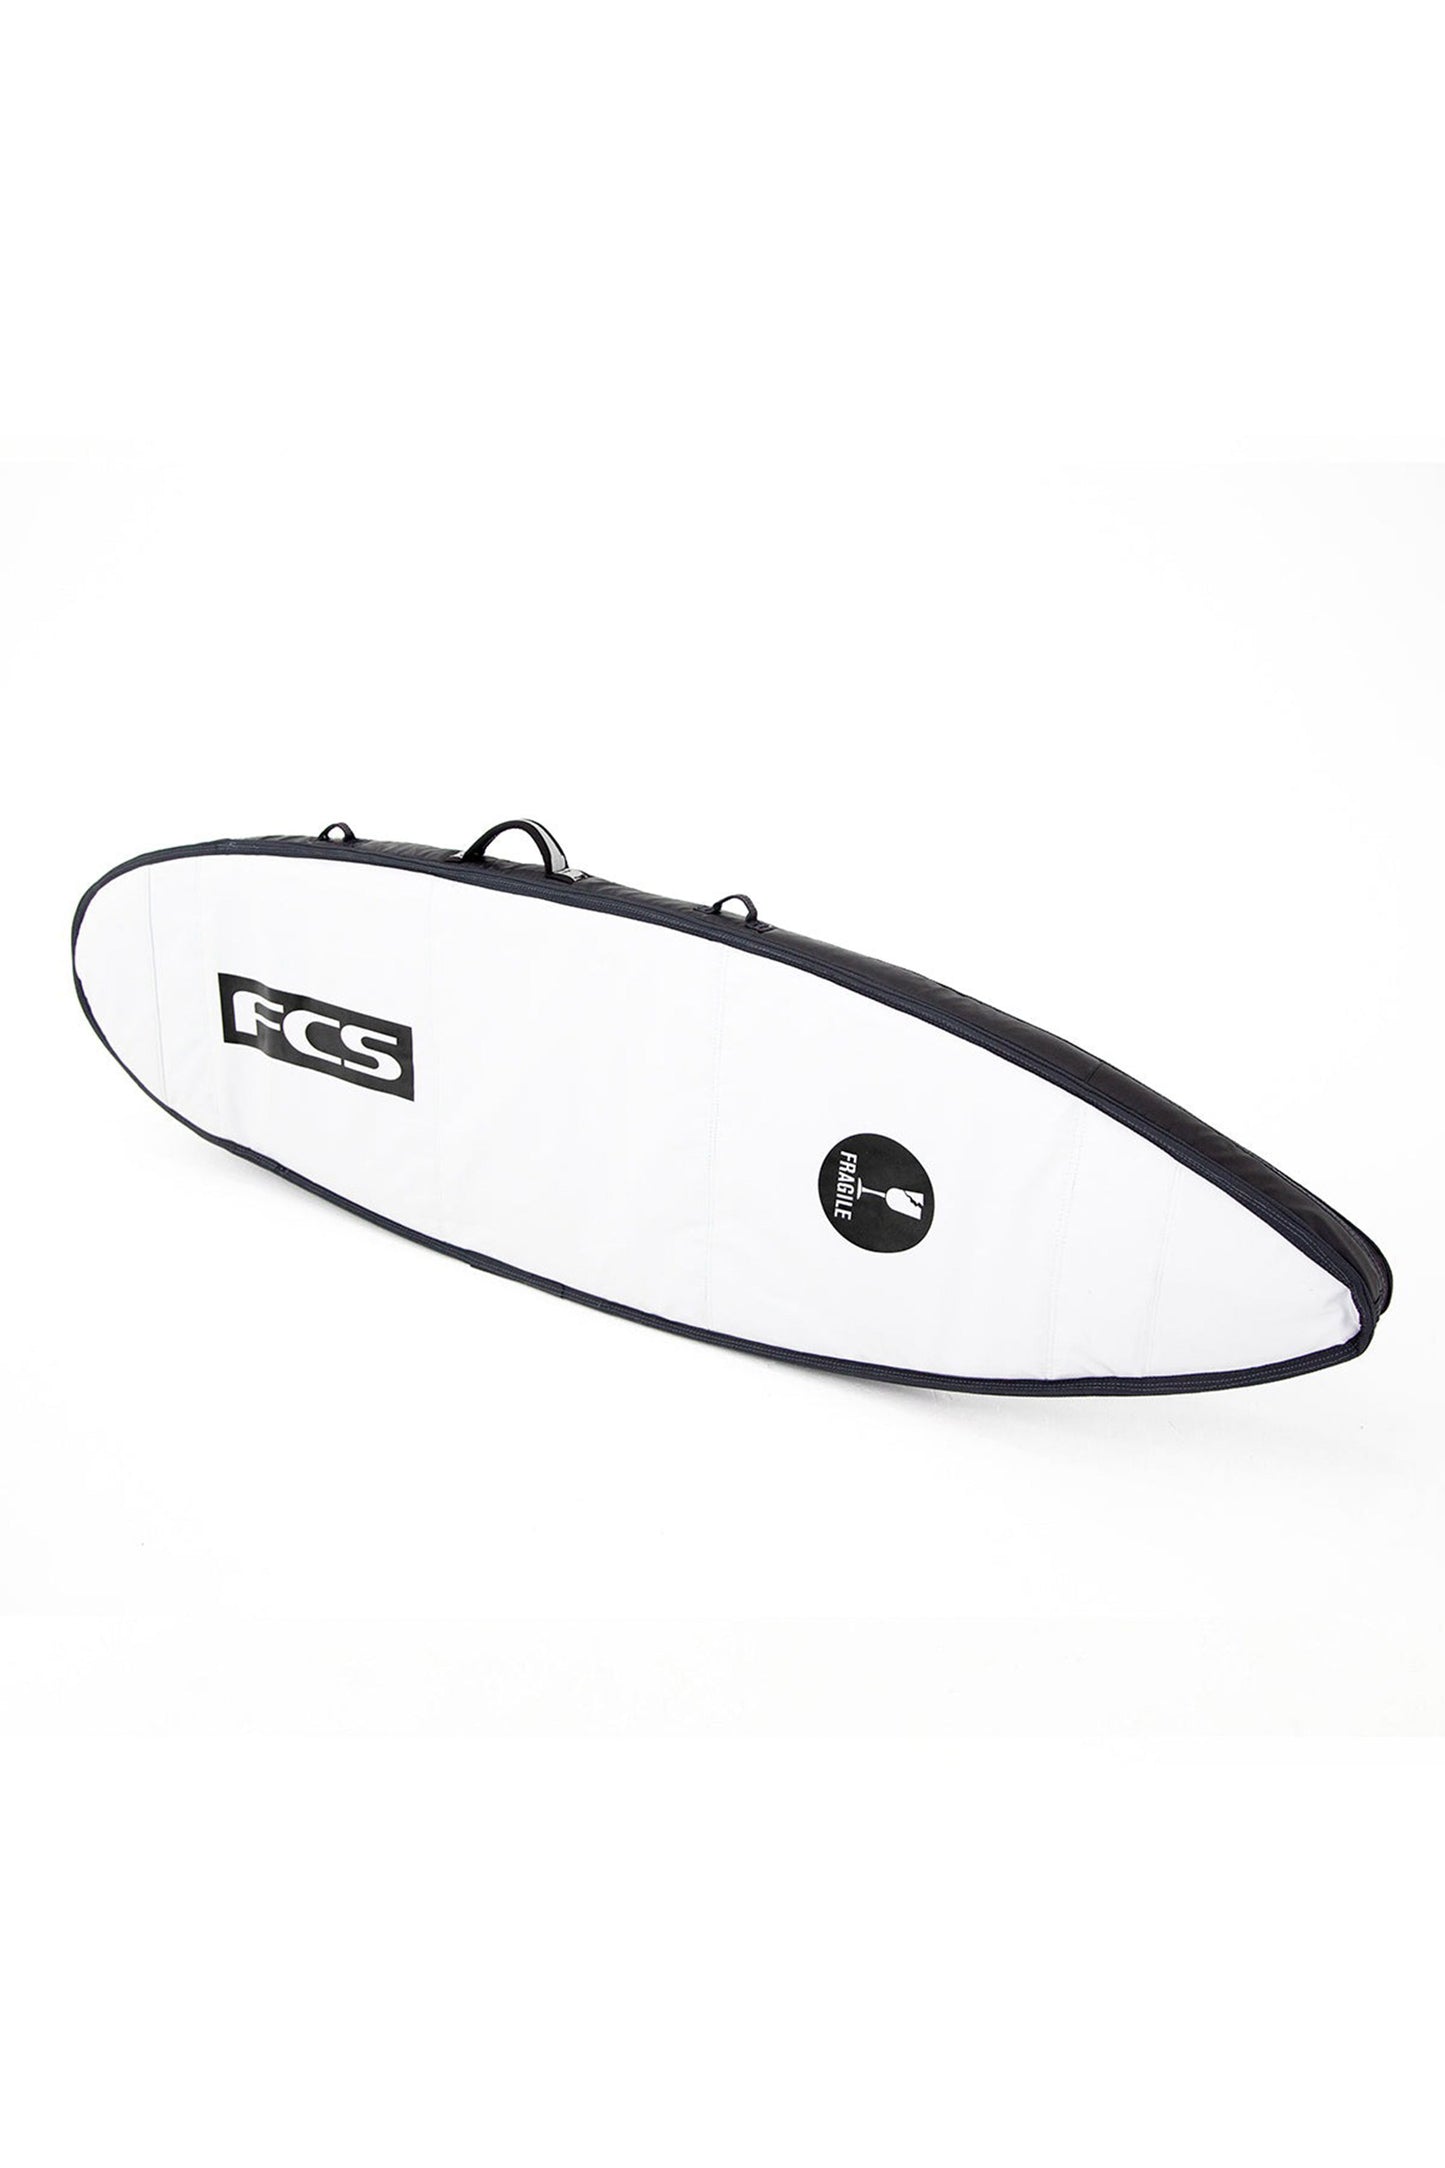    Pukas-Surf-Shop-FCS-Boardbag-Travel-All-Purpose-Black